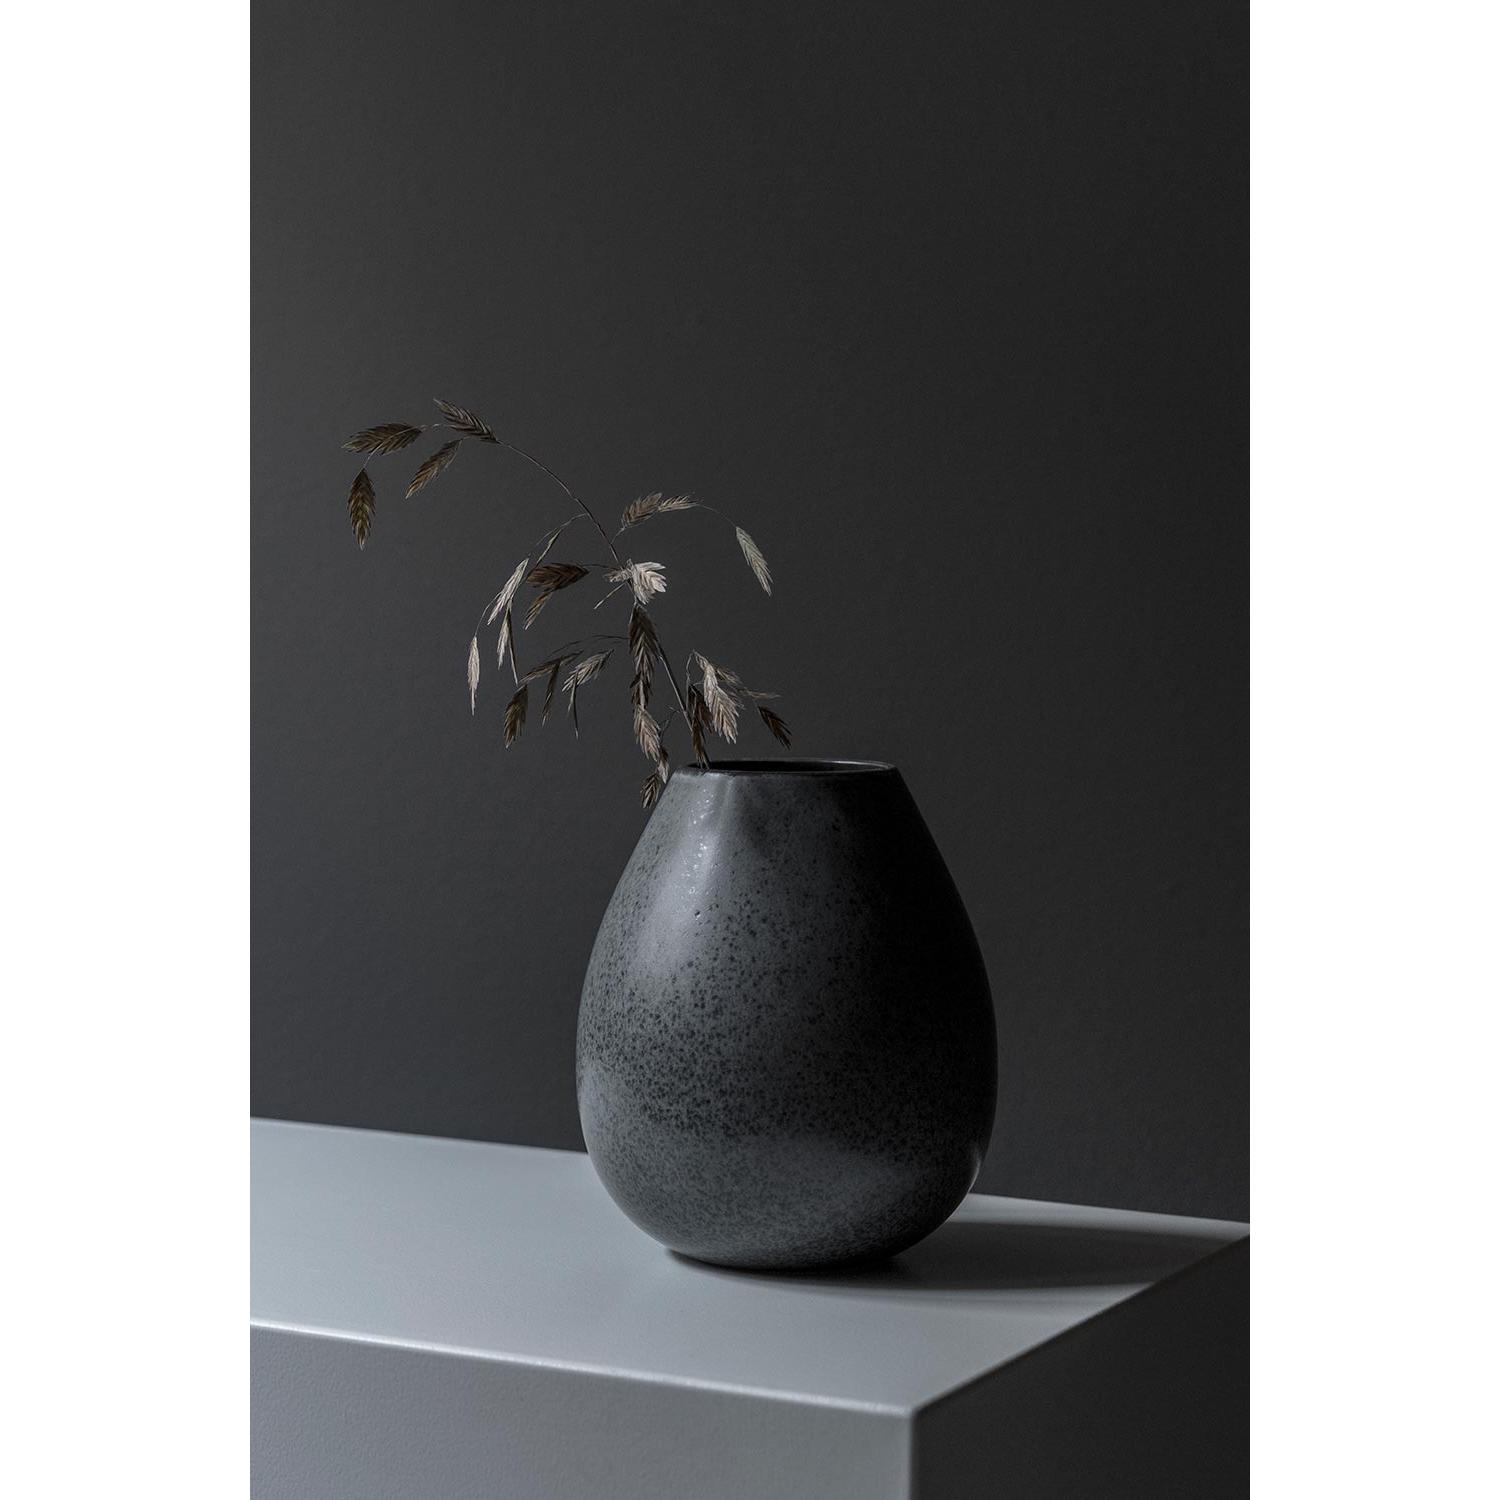 Klassik Studio Vase de drop milo, noir